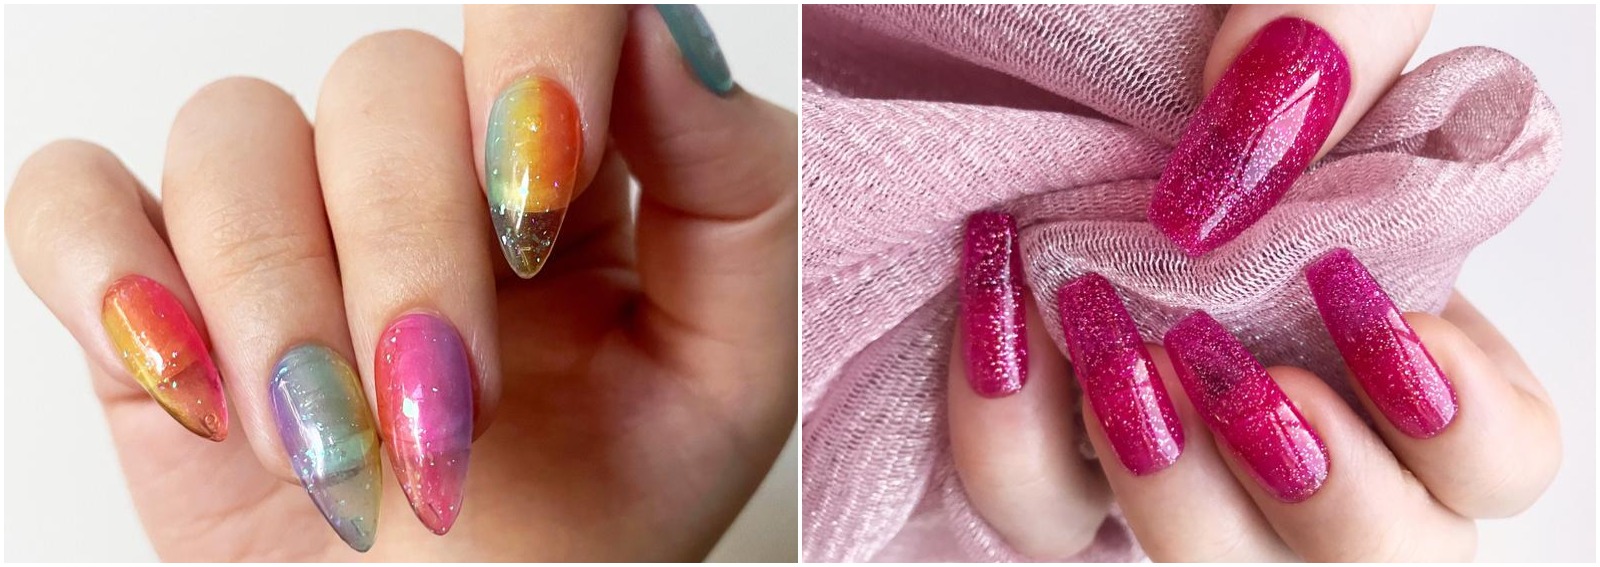 jelly nails unghie effetto gelantina manicure originale estate cover dekstop